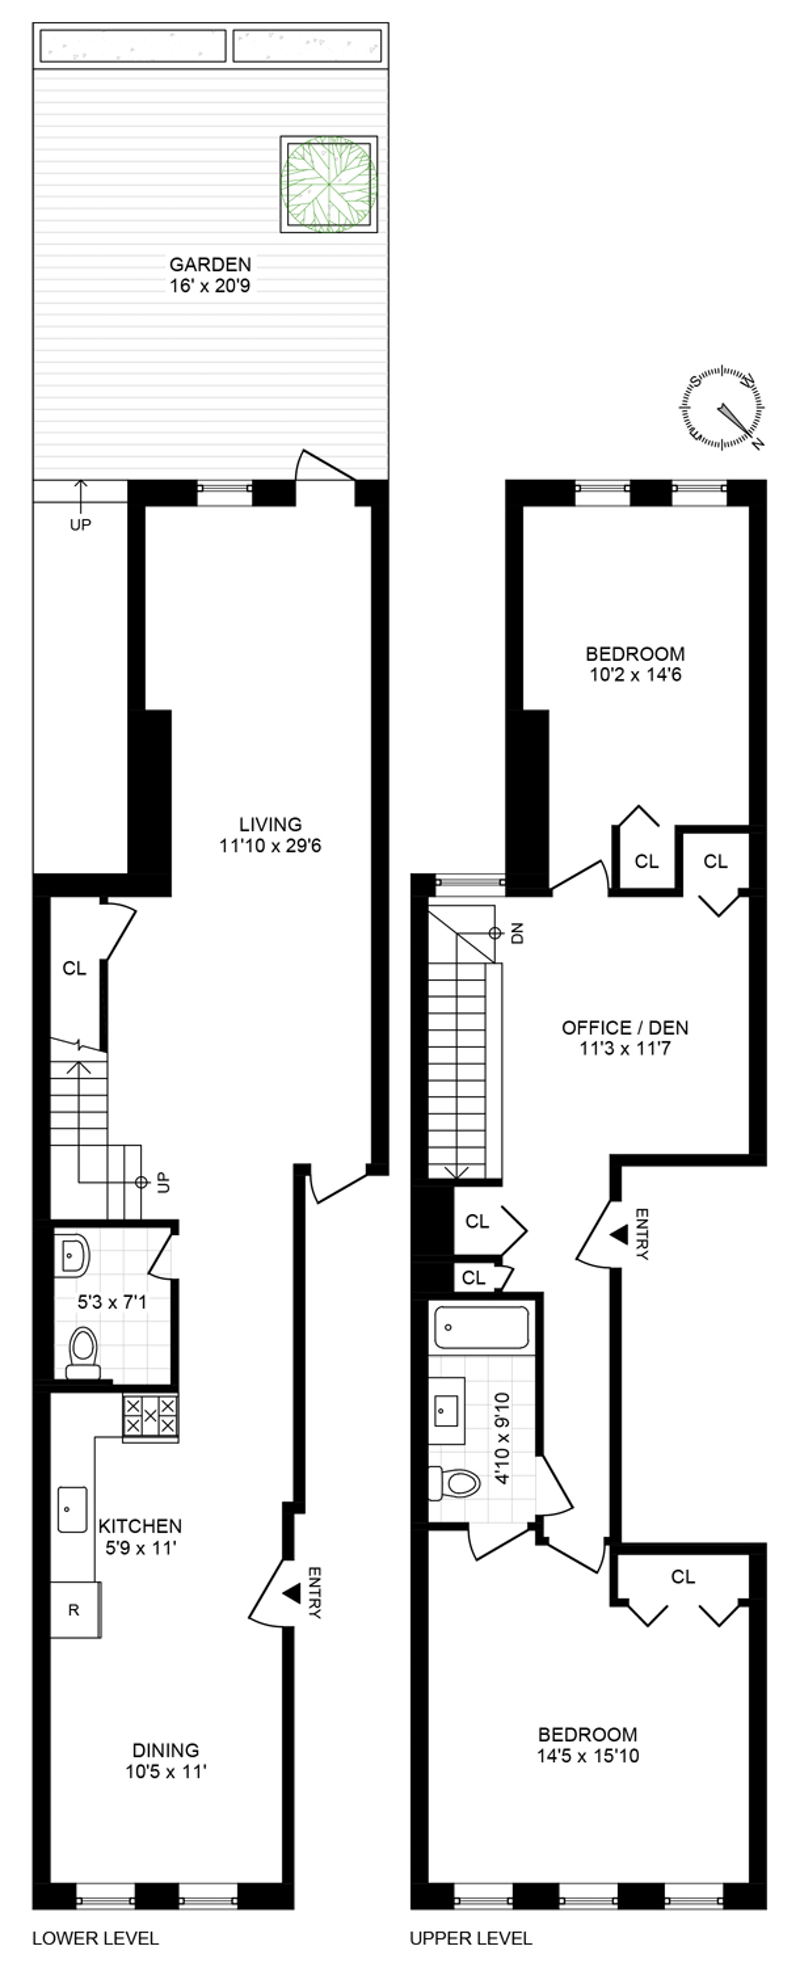 Floorplan for 508 West, 142nd Street